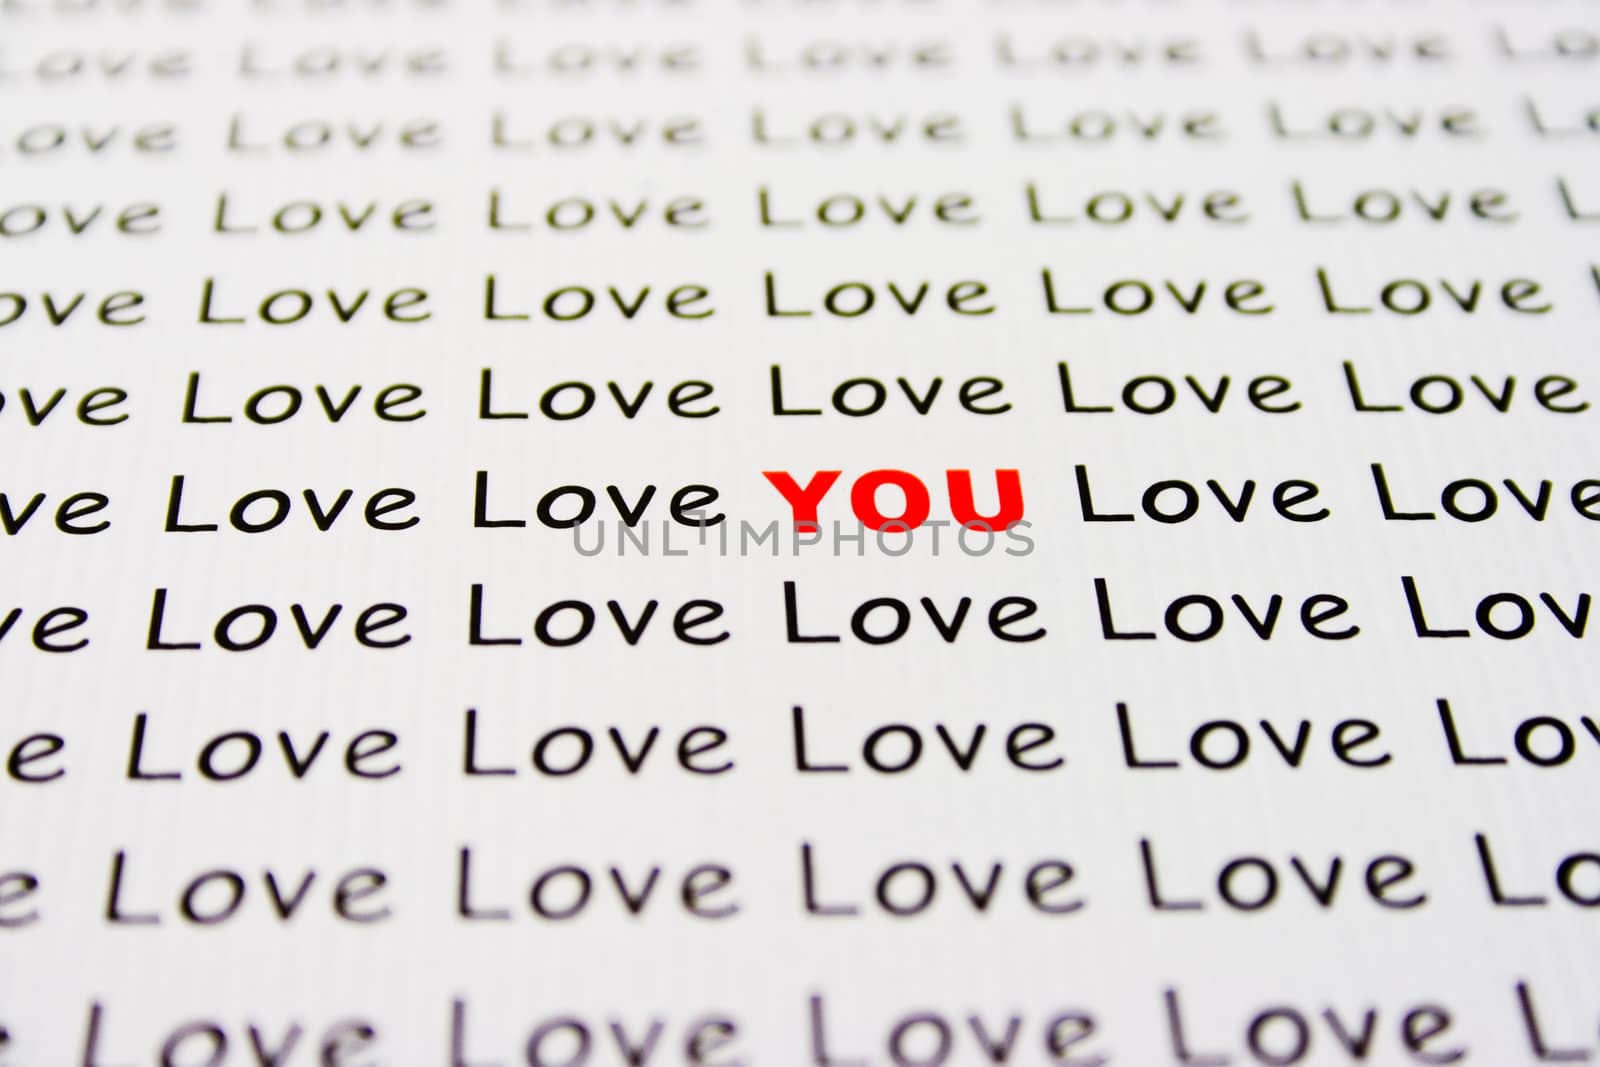 An original Love You inscription on white paper